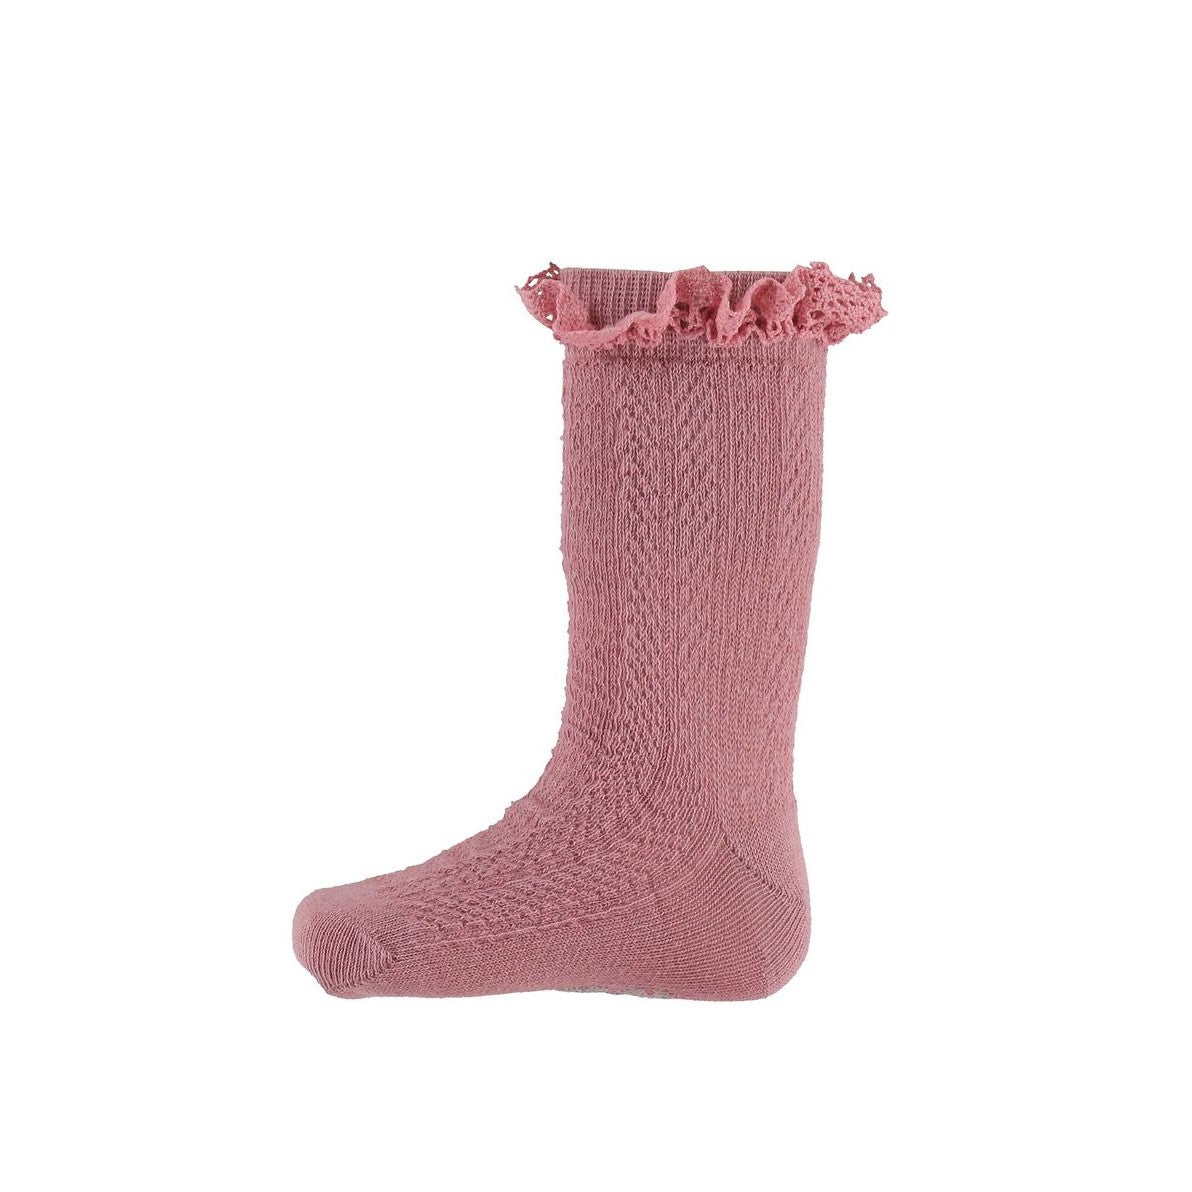 Lace Top Socks: Lilac